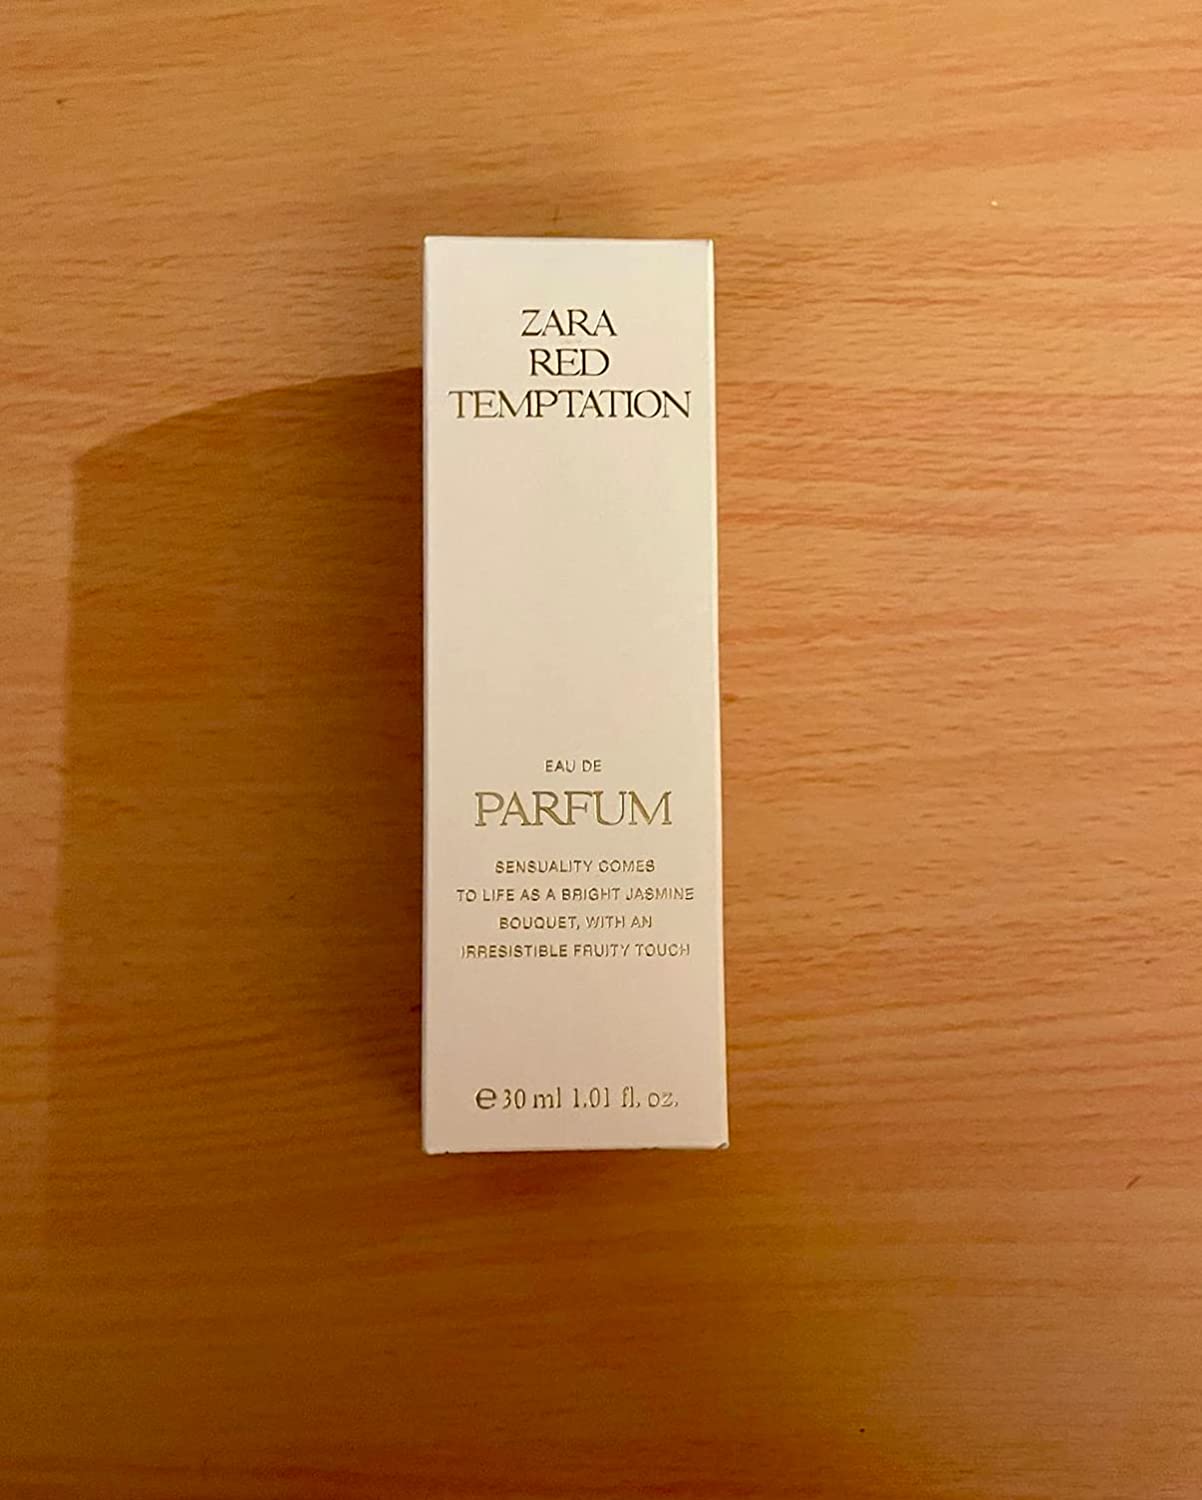 Zara Woman Fields at Nightfall Eau de Parfum Fragrance Perfume 30ml 1.0 oz New